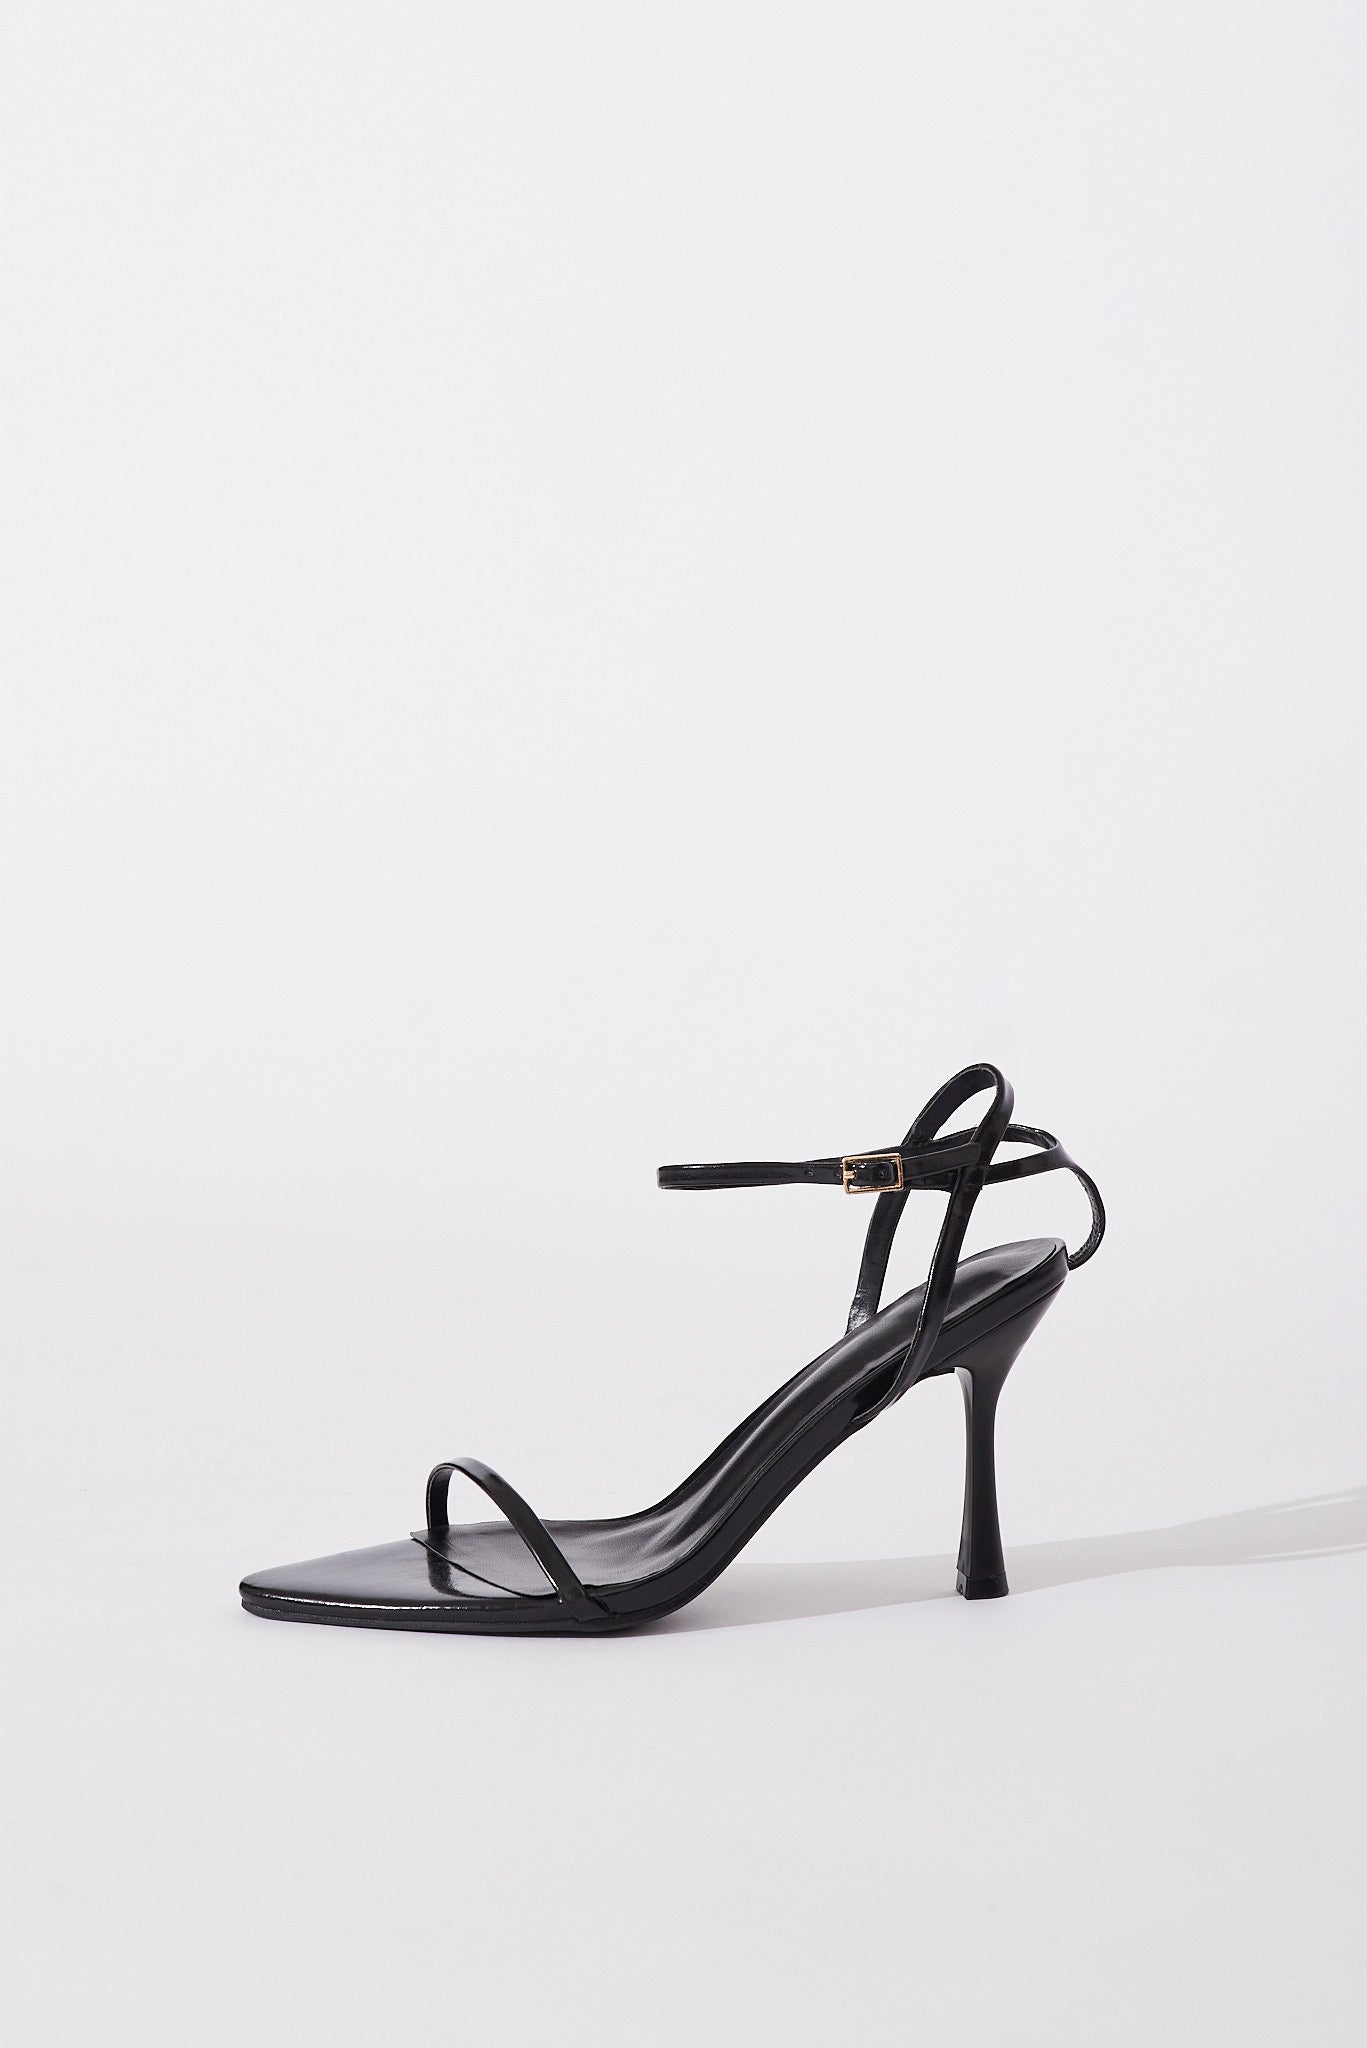 August + Delilah Prima Ankle Strap Stiletto Heels In Black - side